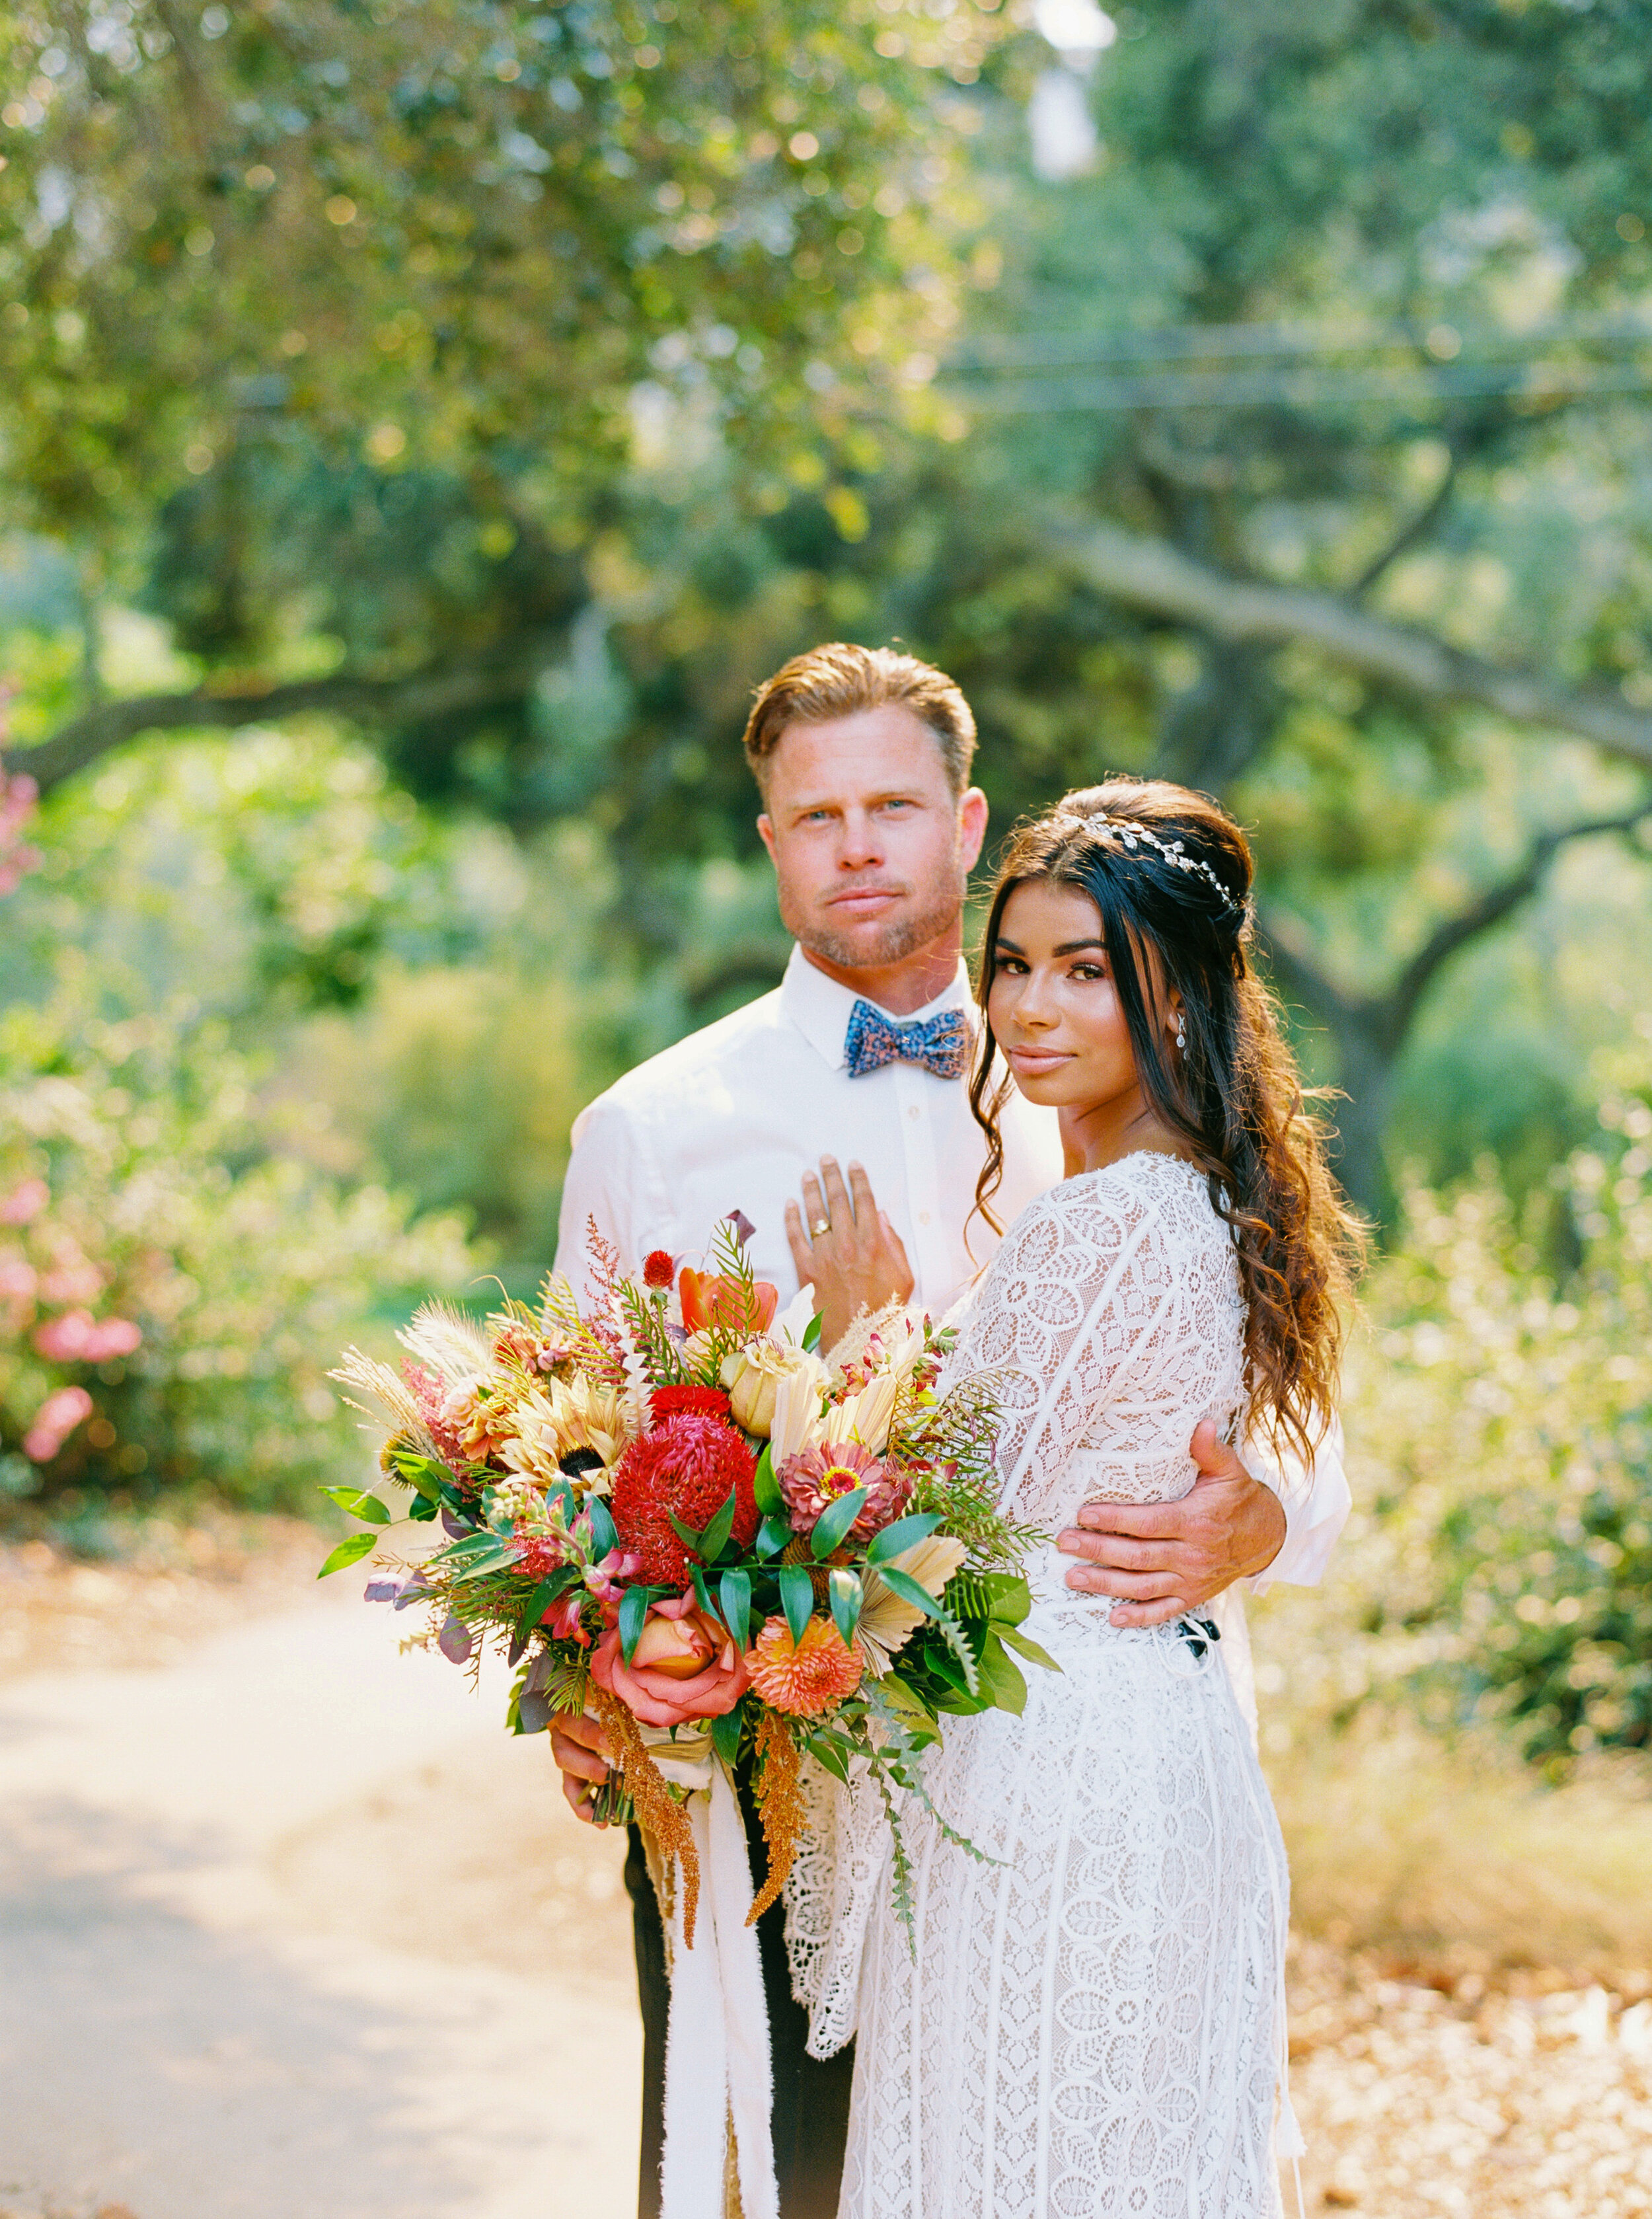 Sarahi Hadden - An Earthy Summer Boho Inspired Wedding with Sunset Hues at Gardener Ranch-103.jpg